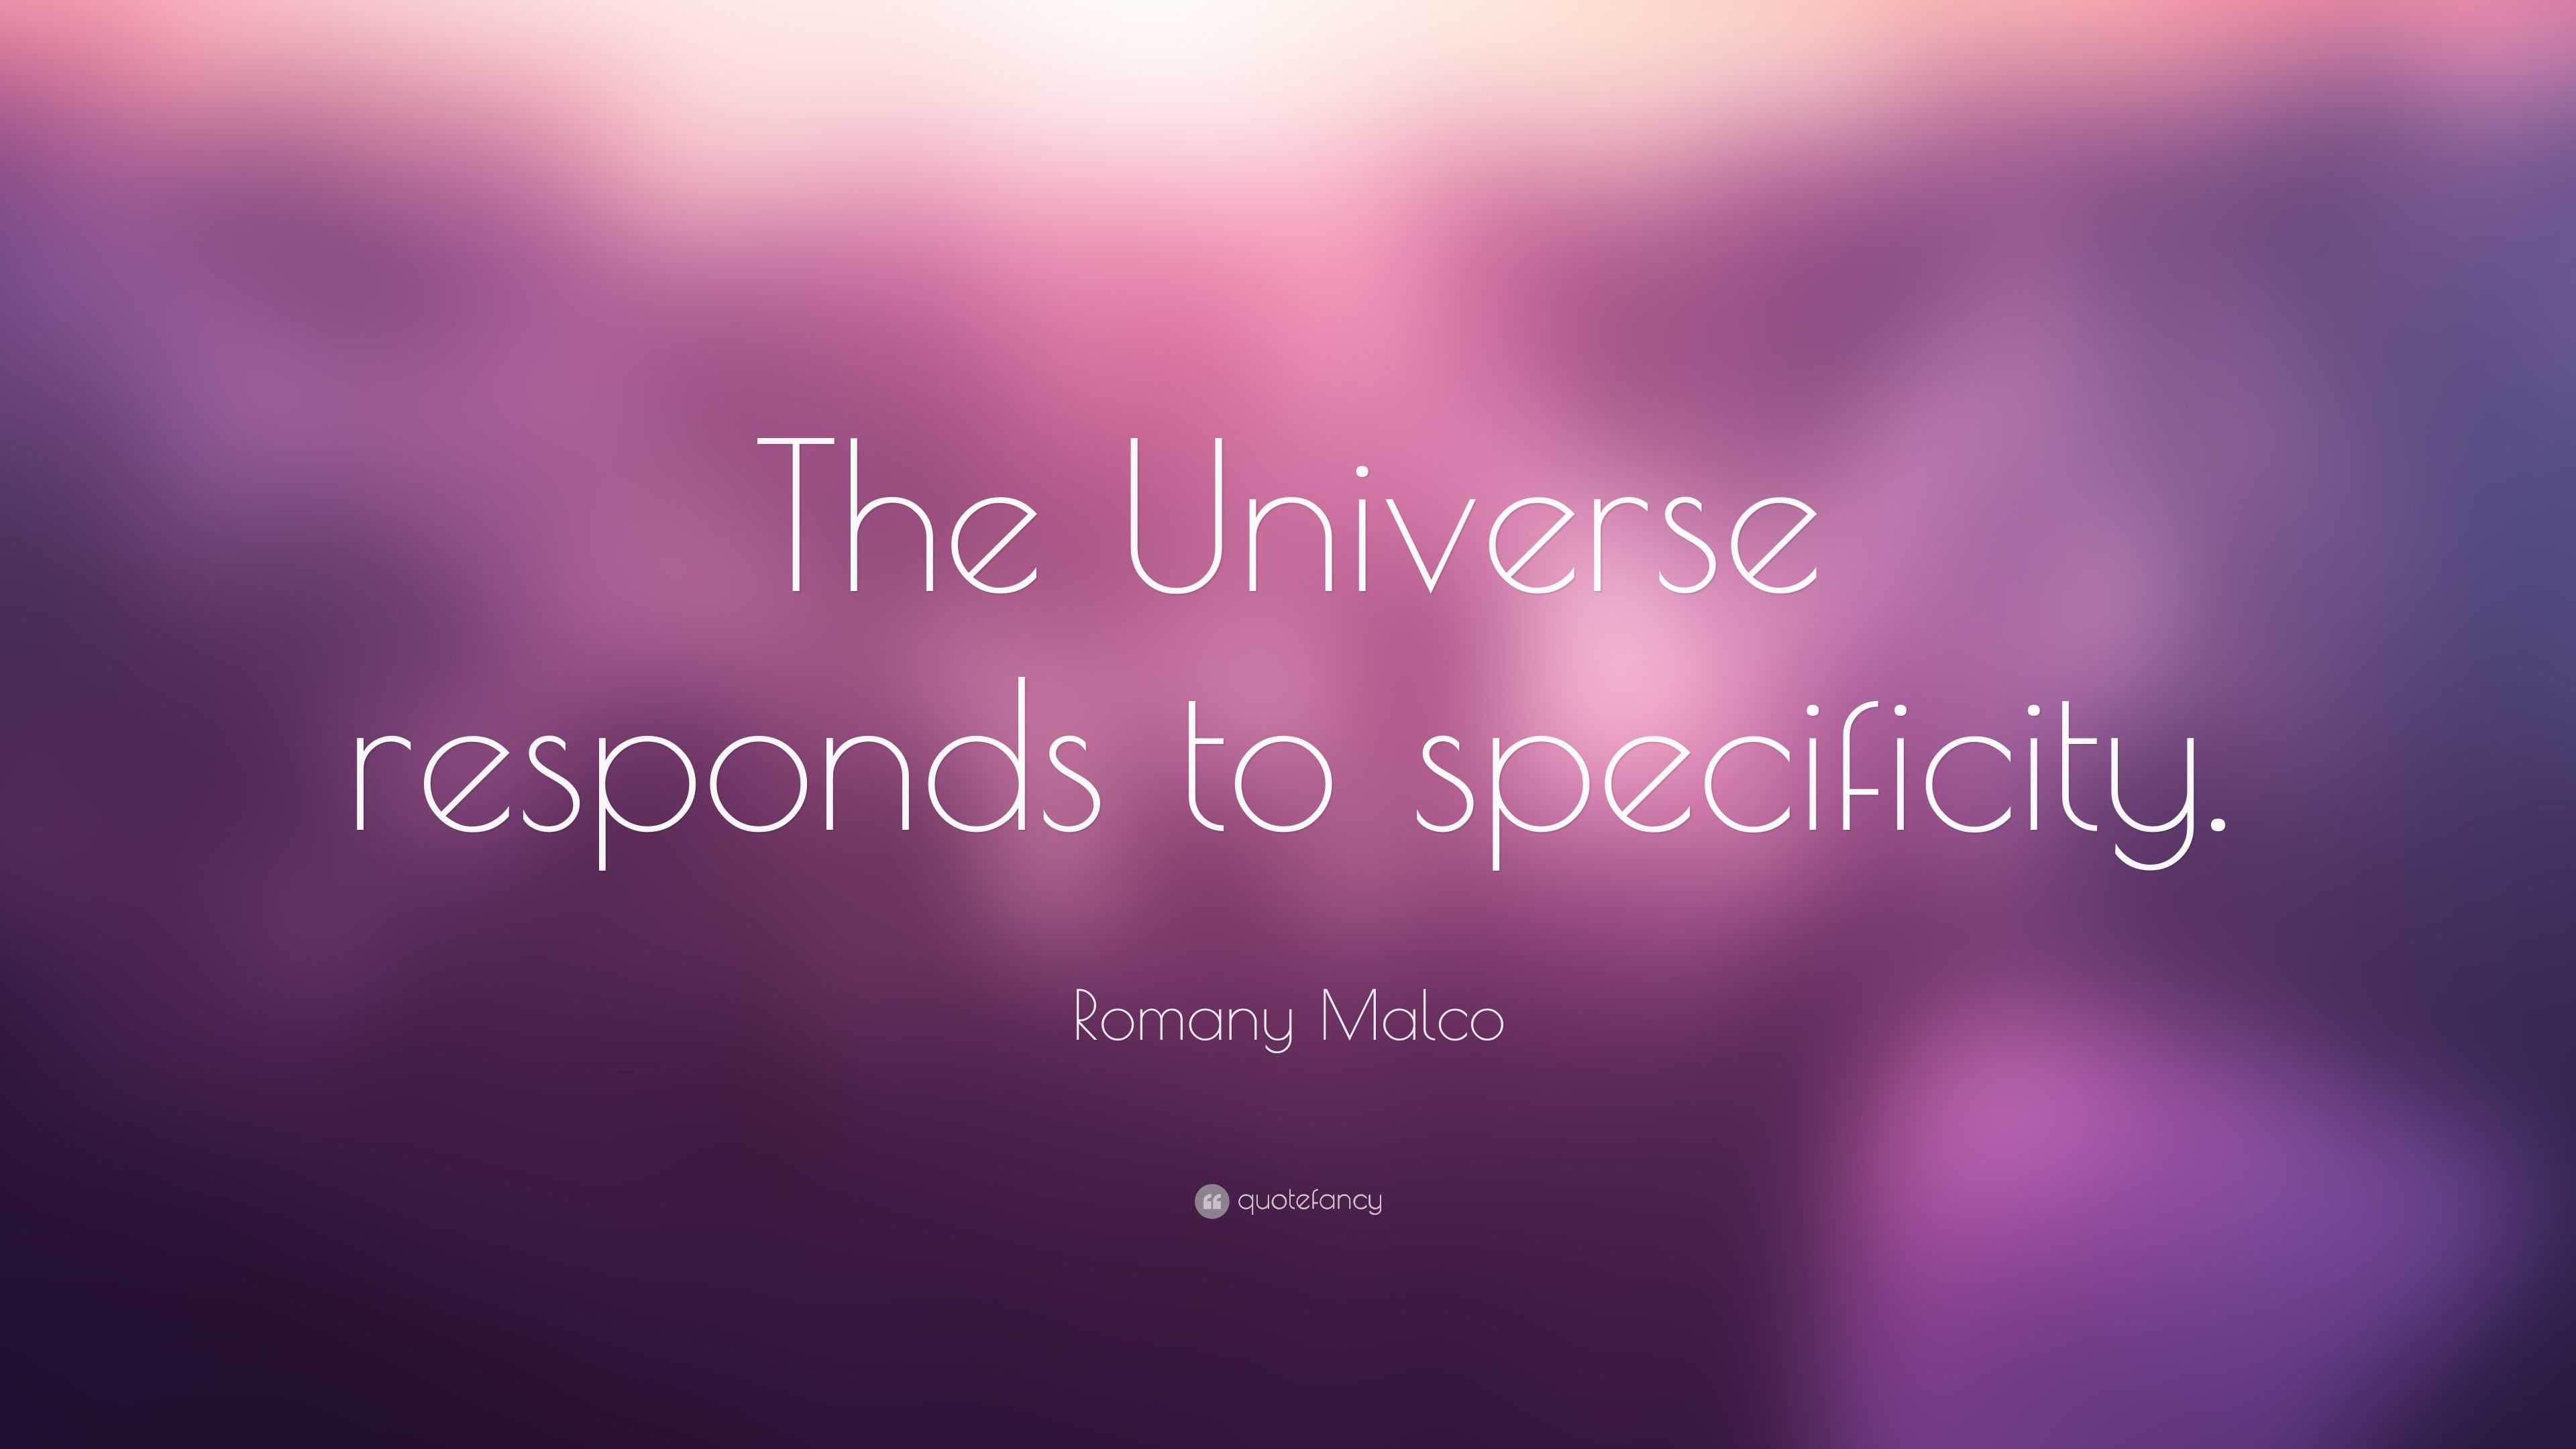 Romany Malco Quote: “The Universe responds to specificity.”